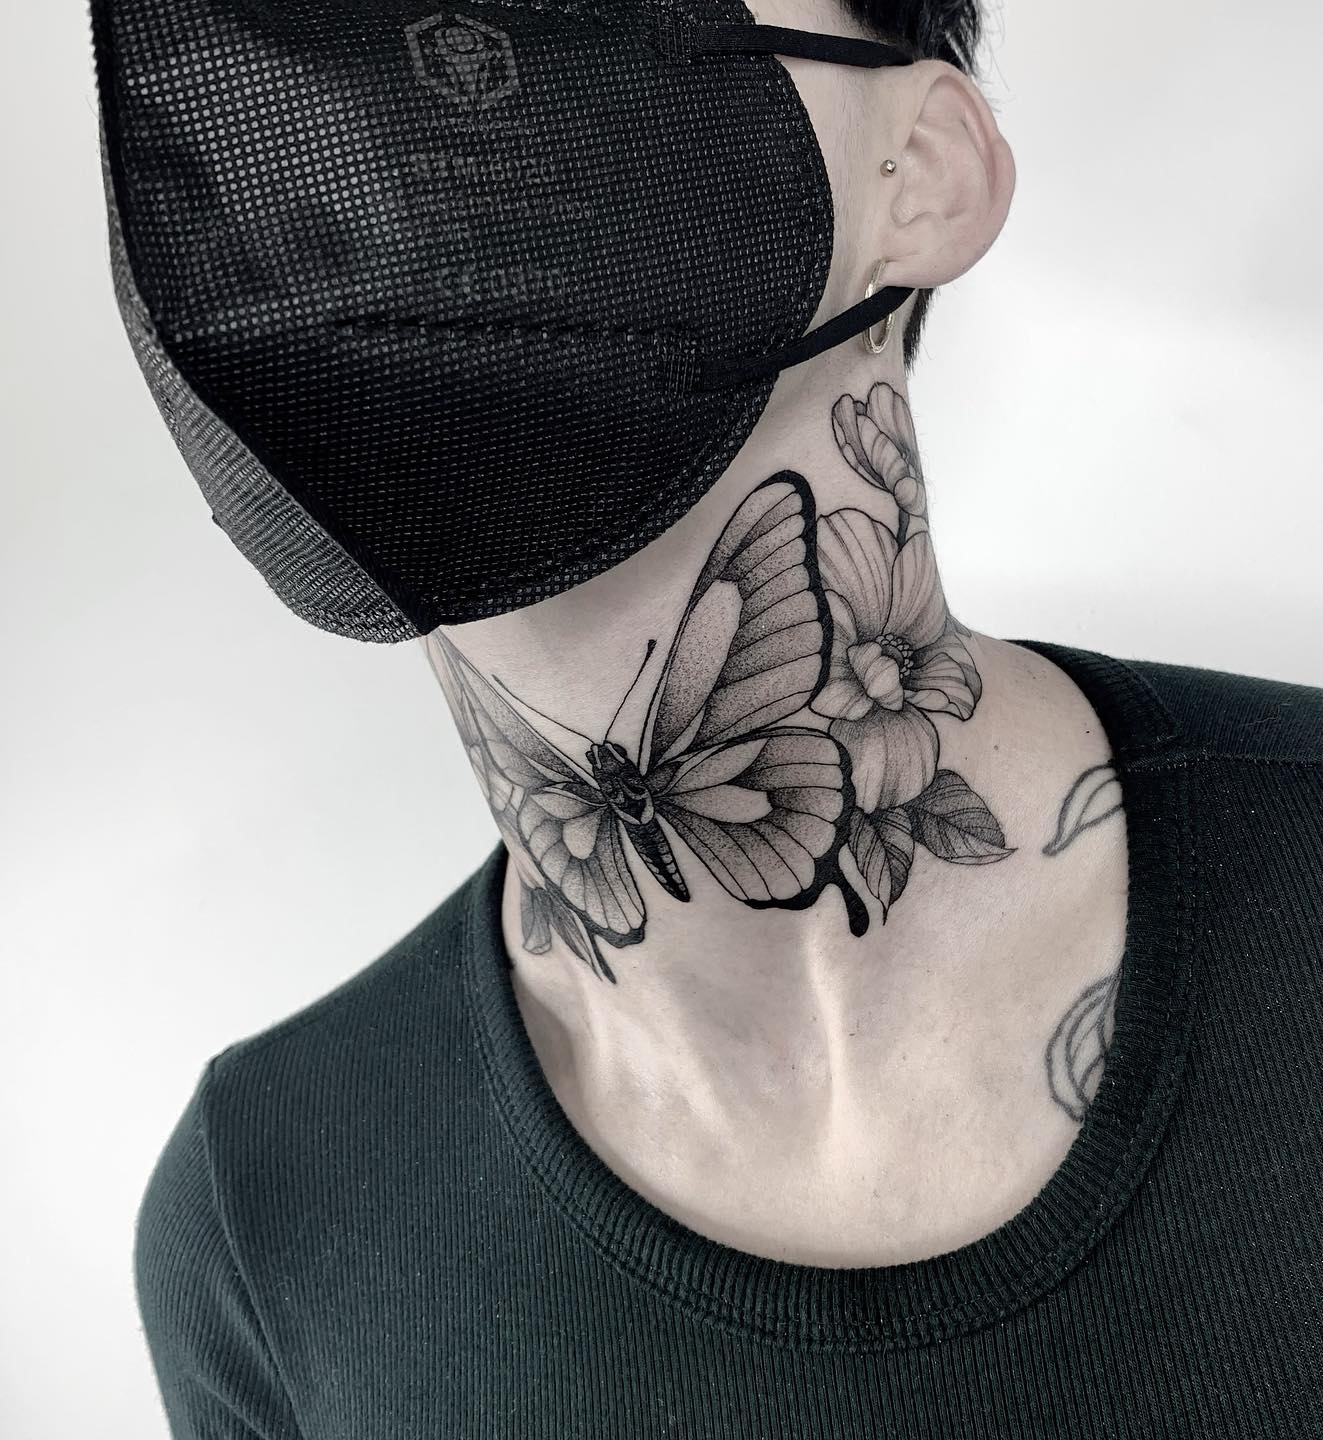 Throat tattoo design | Tattoo contest | 99designs